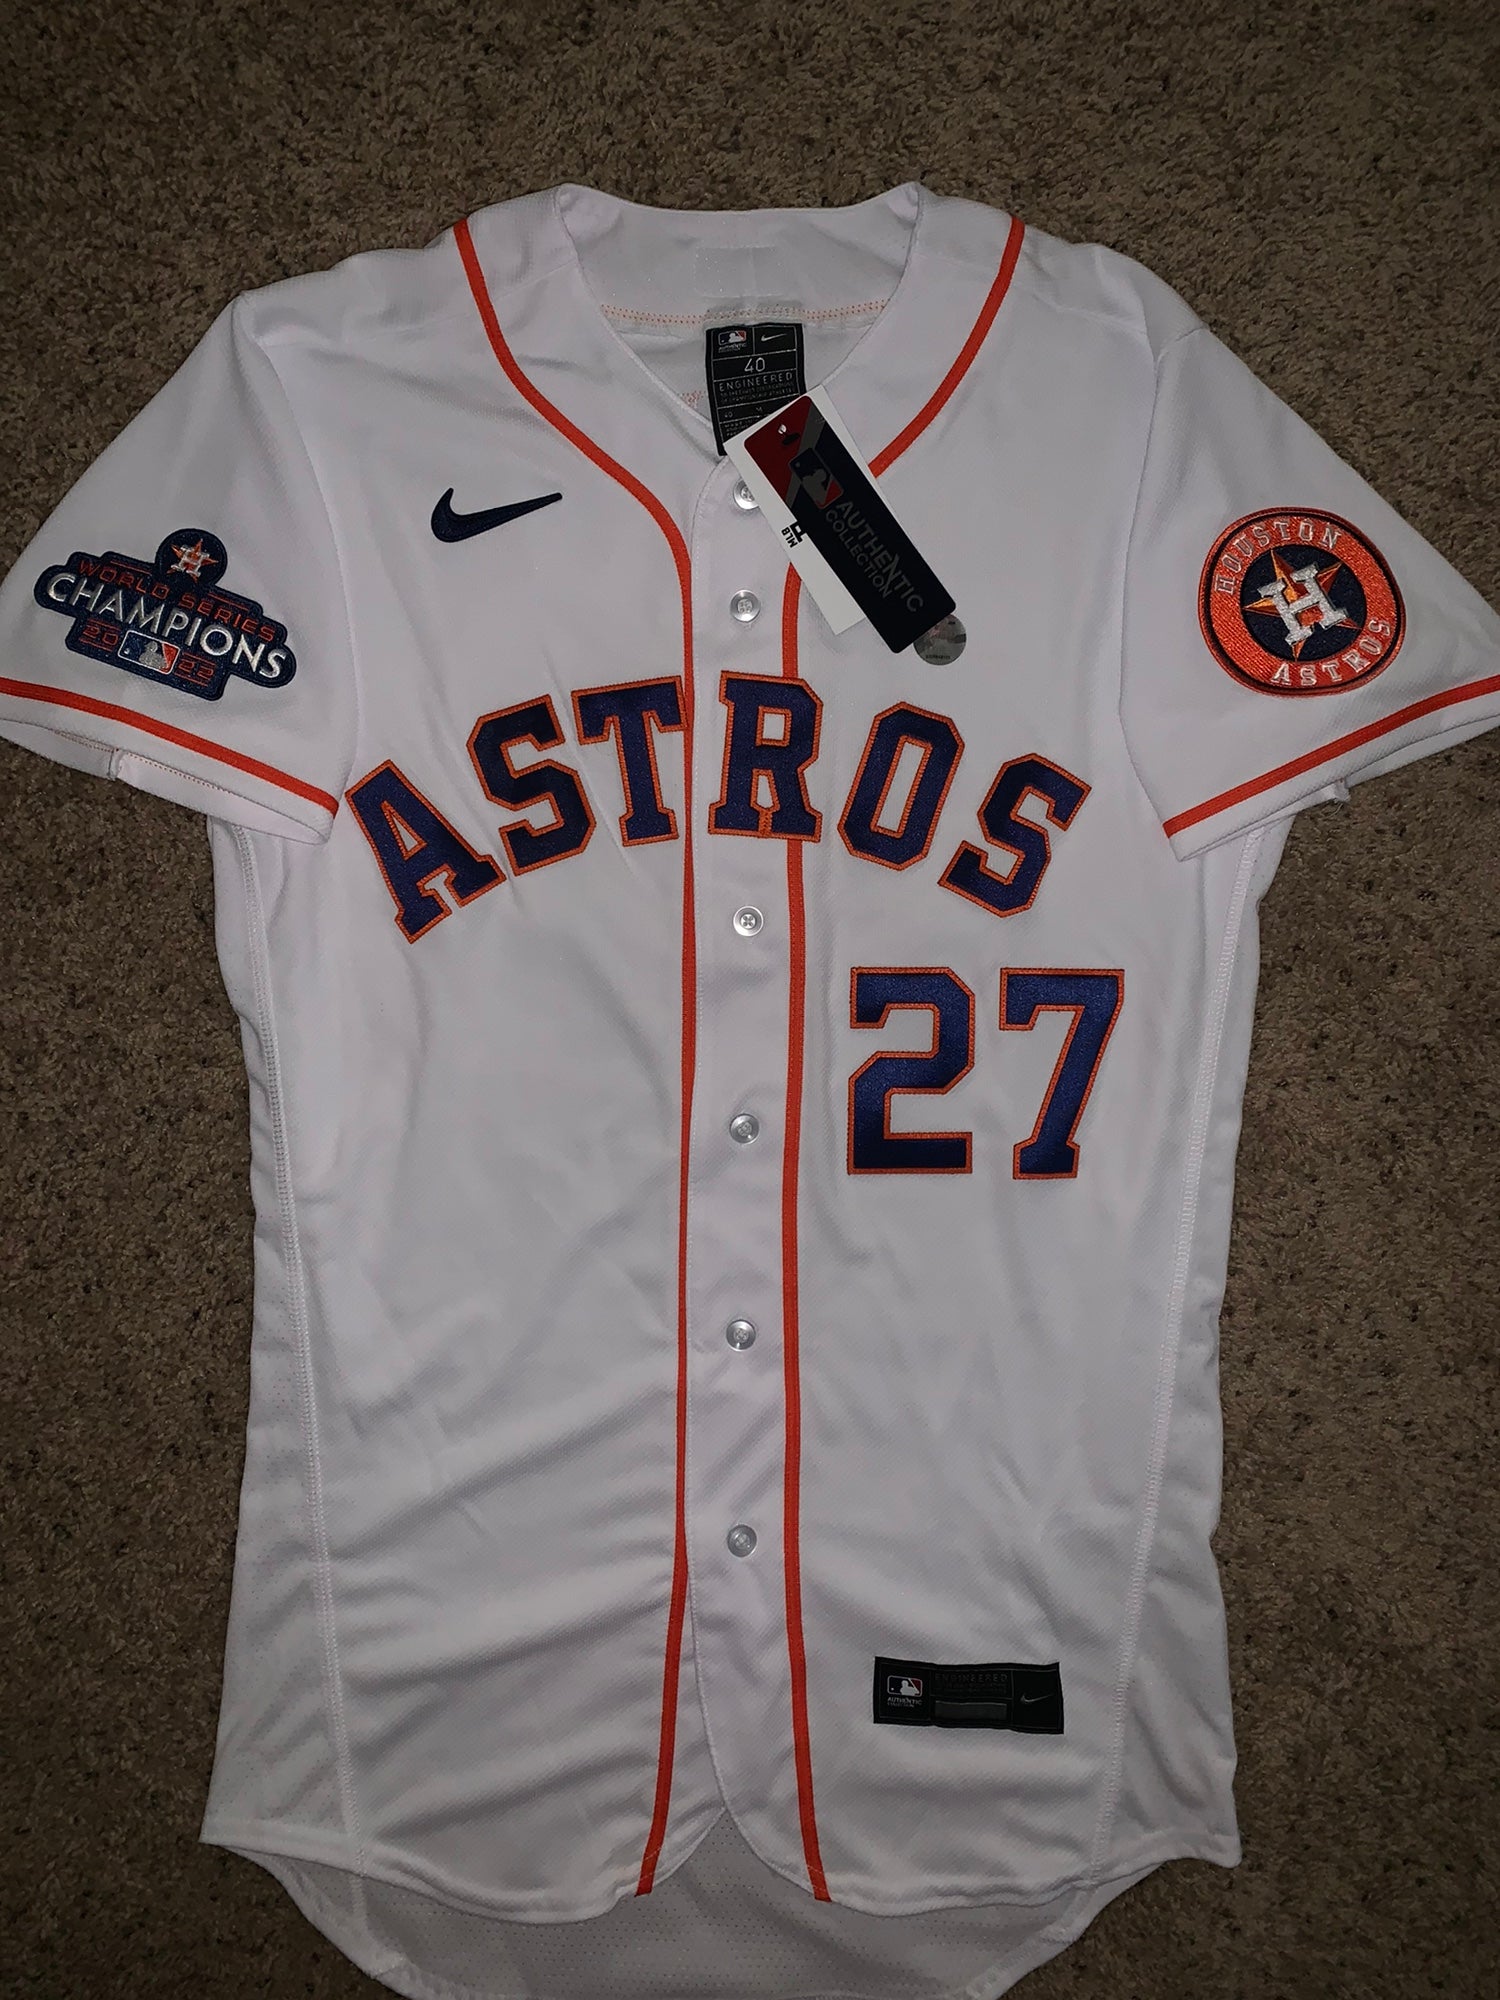 Men's Houston Astros #7 Craig Biggio 25th Anniversary Stitched MLB Jersey  SIZE M